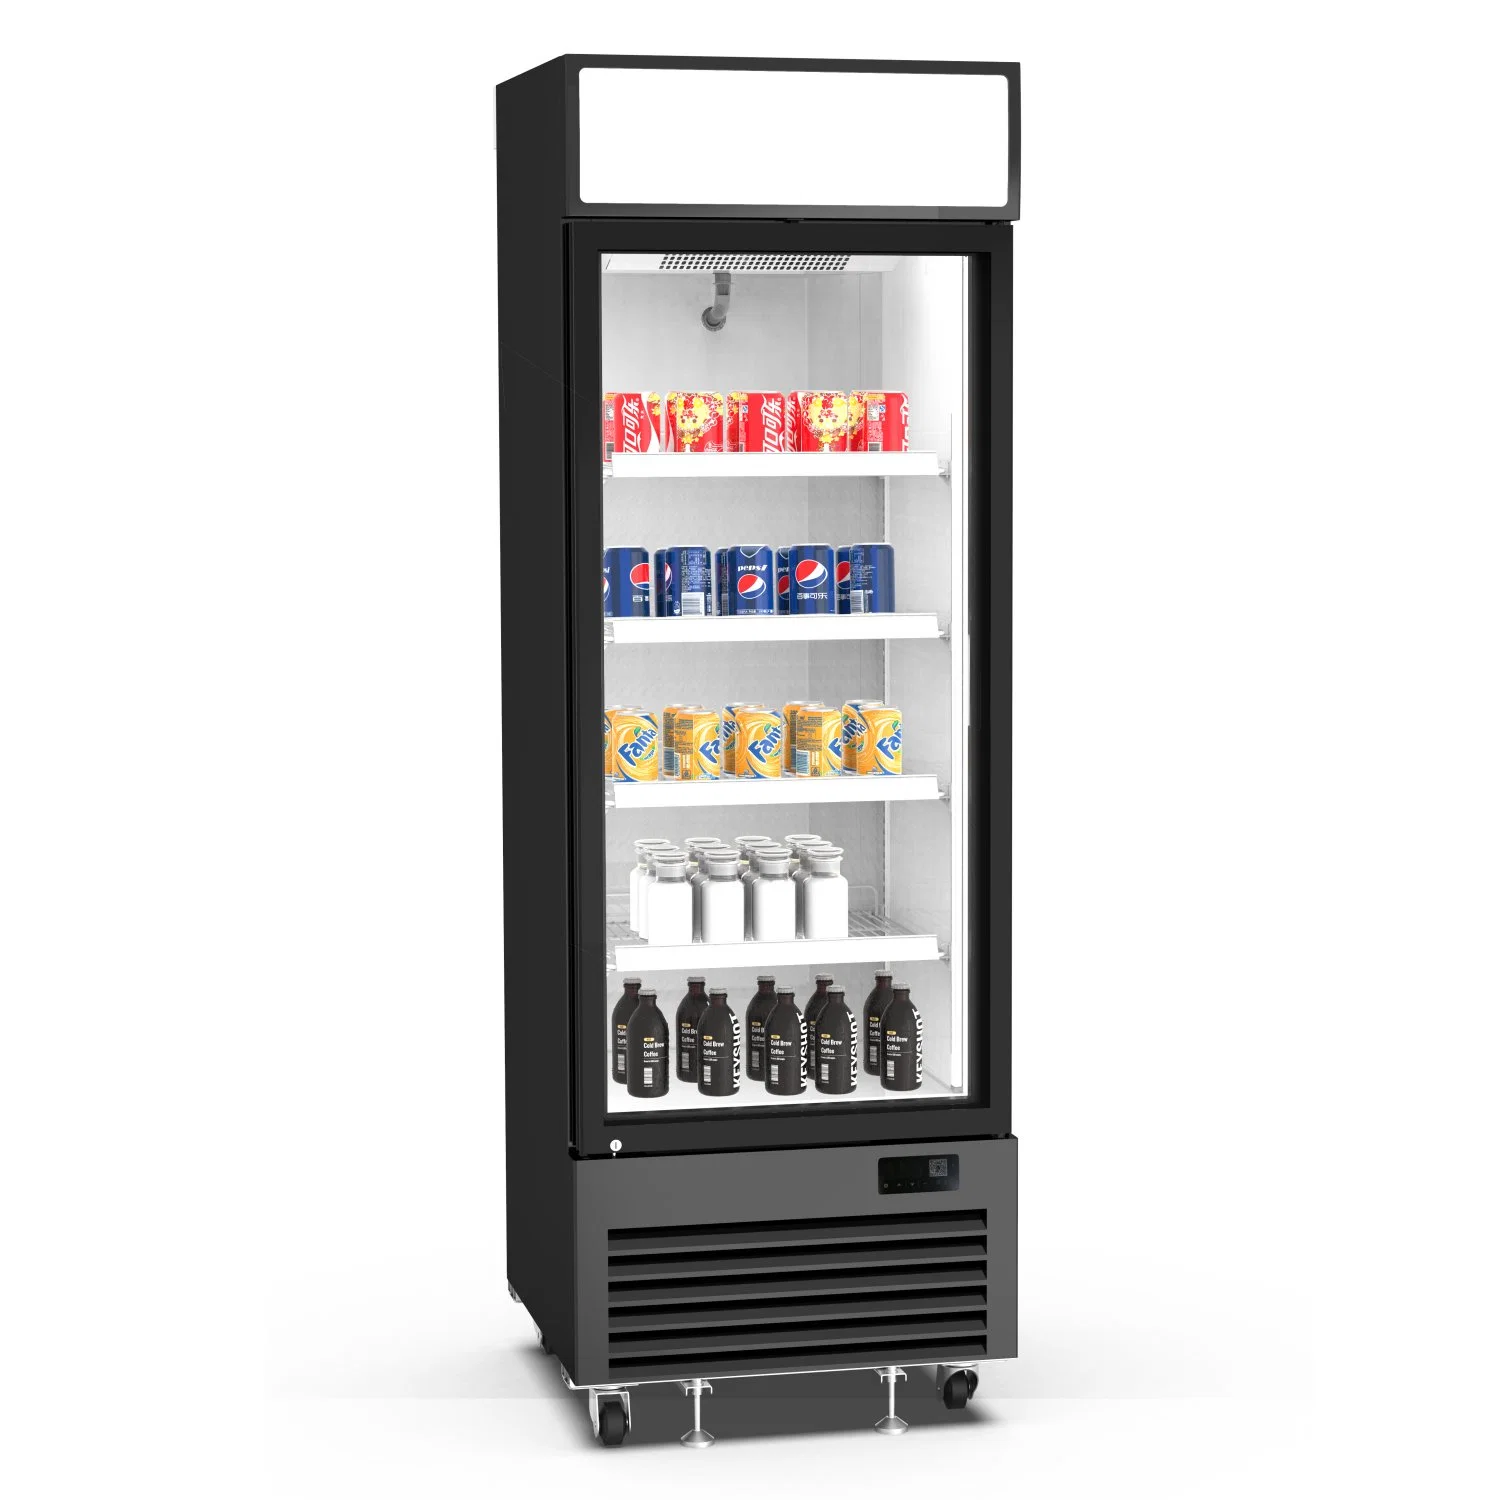 Upright Commercial Refrigerator Freezer with Glass Door for Supermarket Kitchen Beer Drink Display